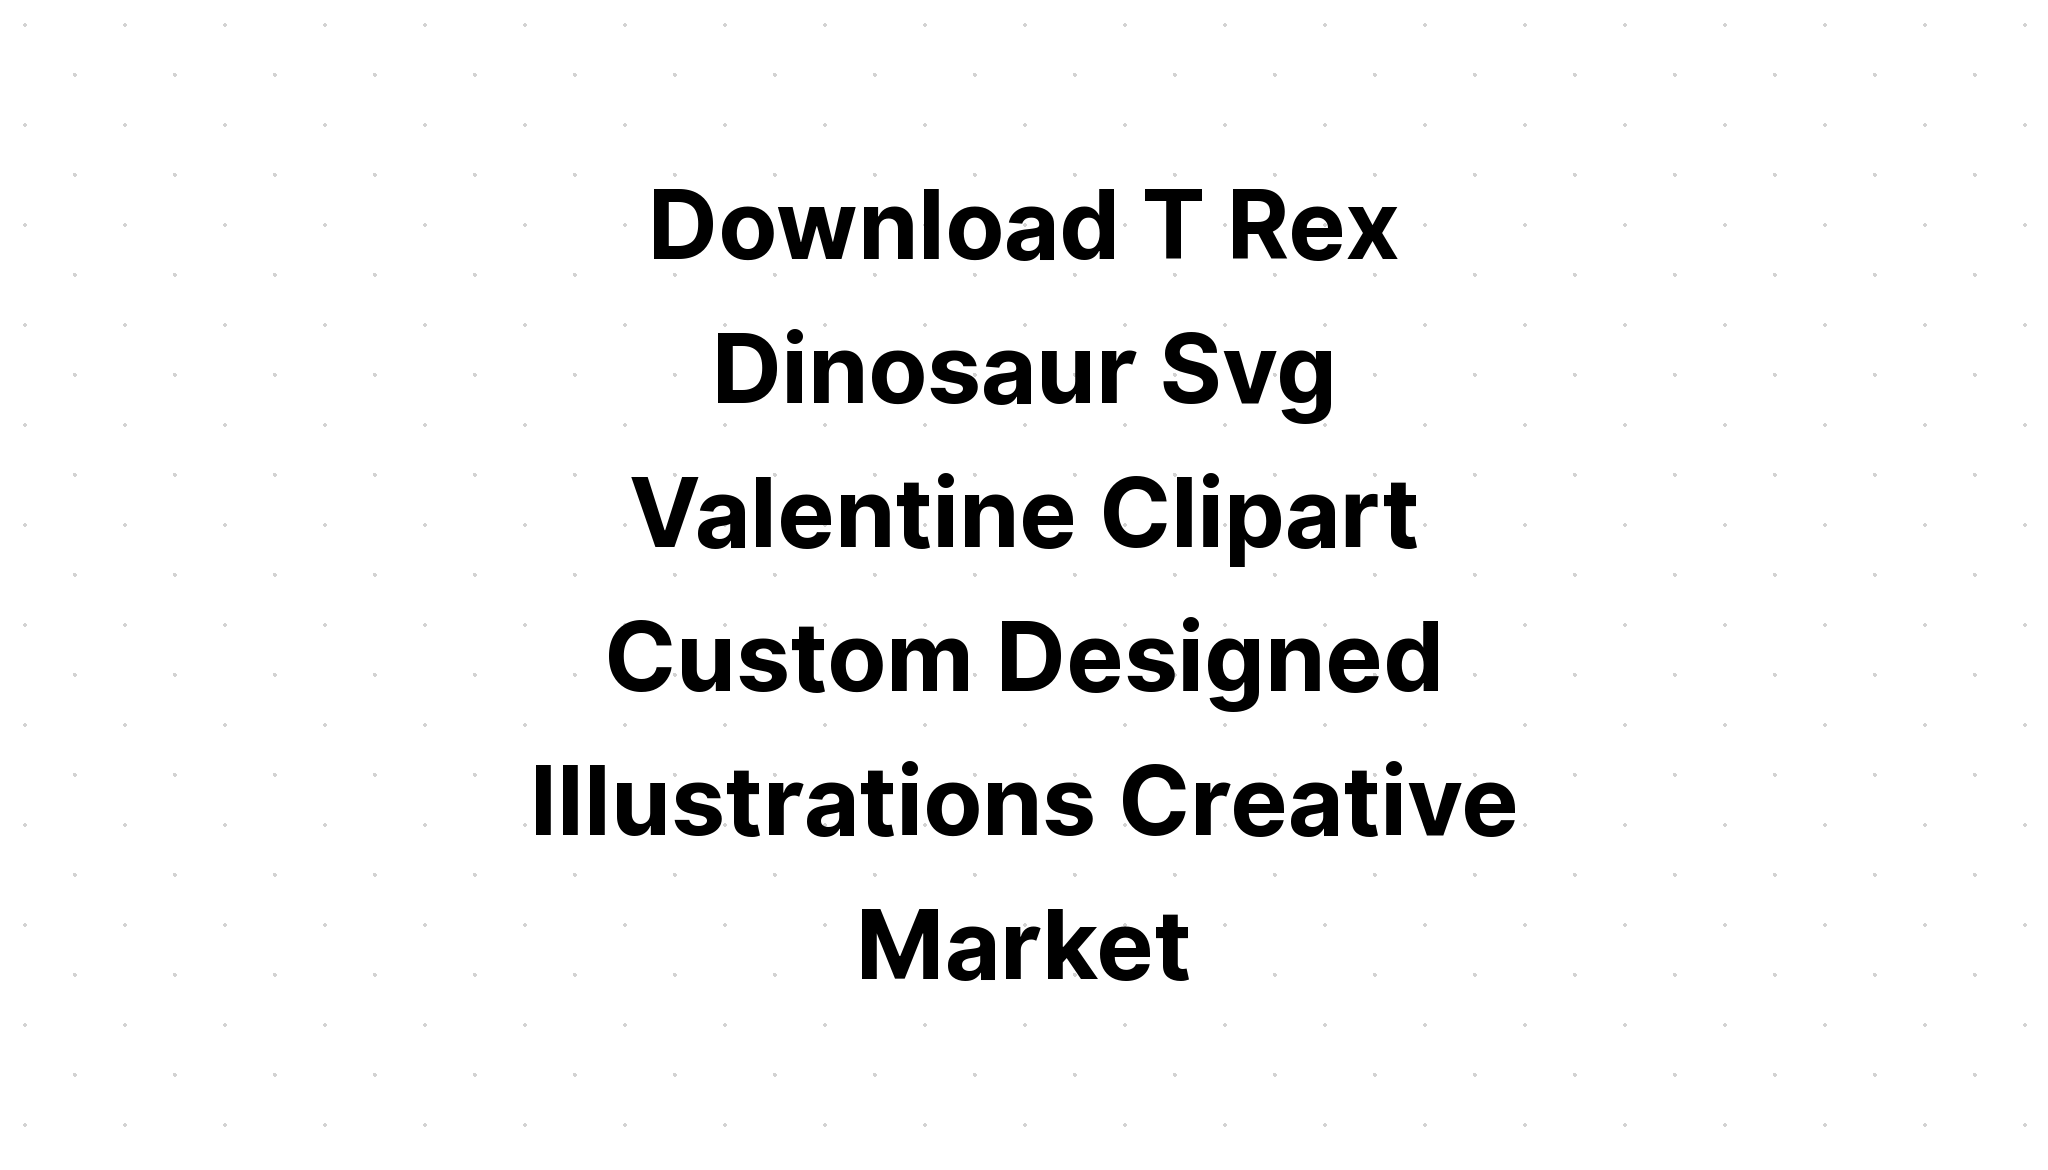 Download Valentine Dinosaur Svg - Layered SVG Cut File